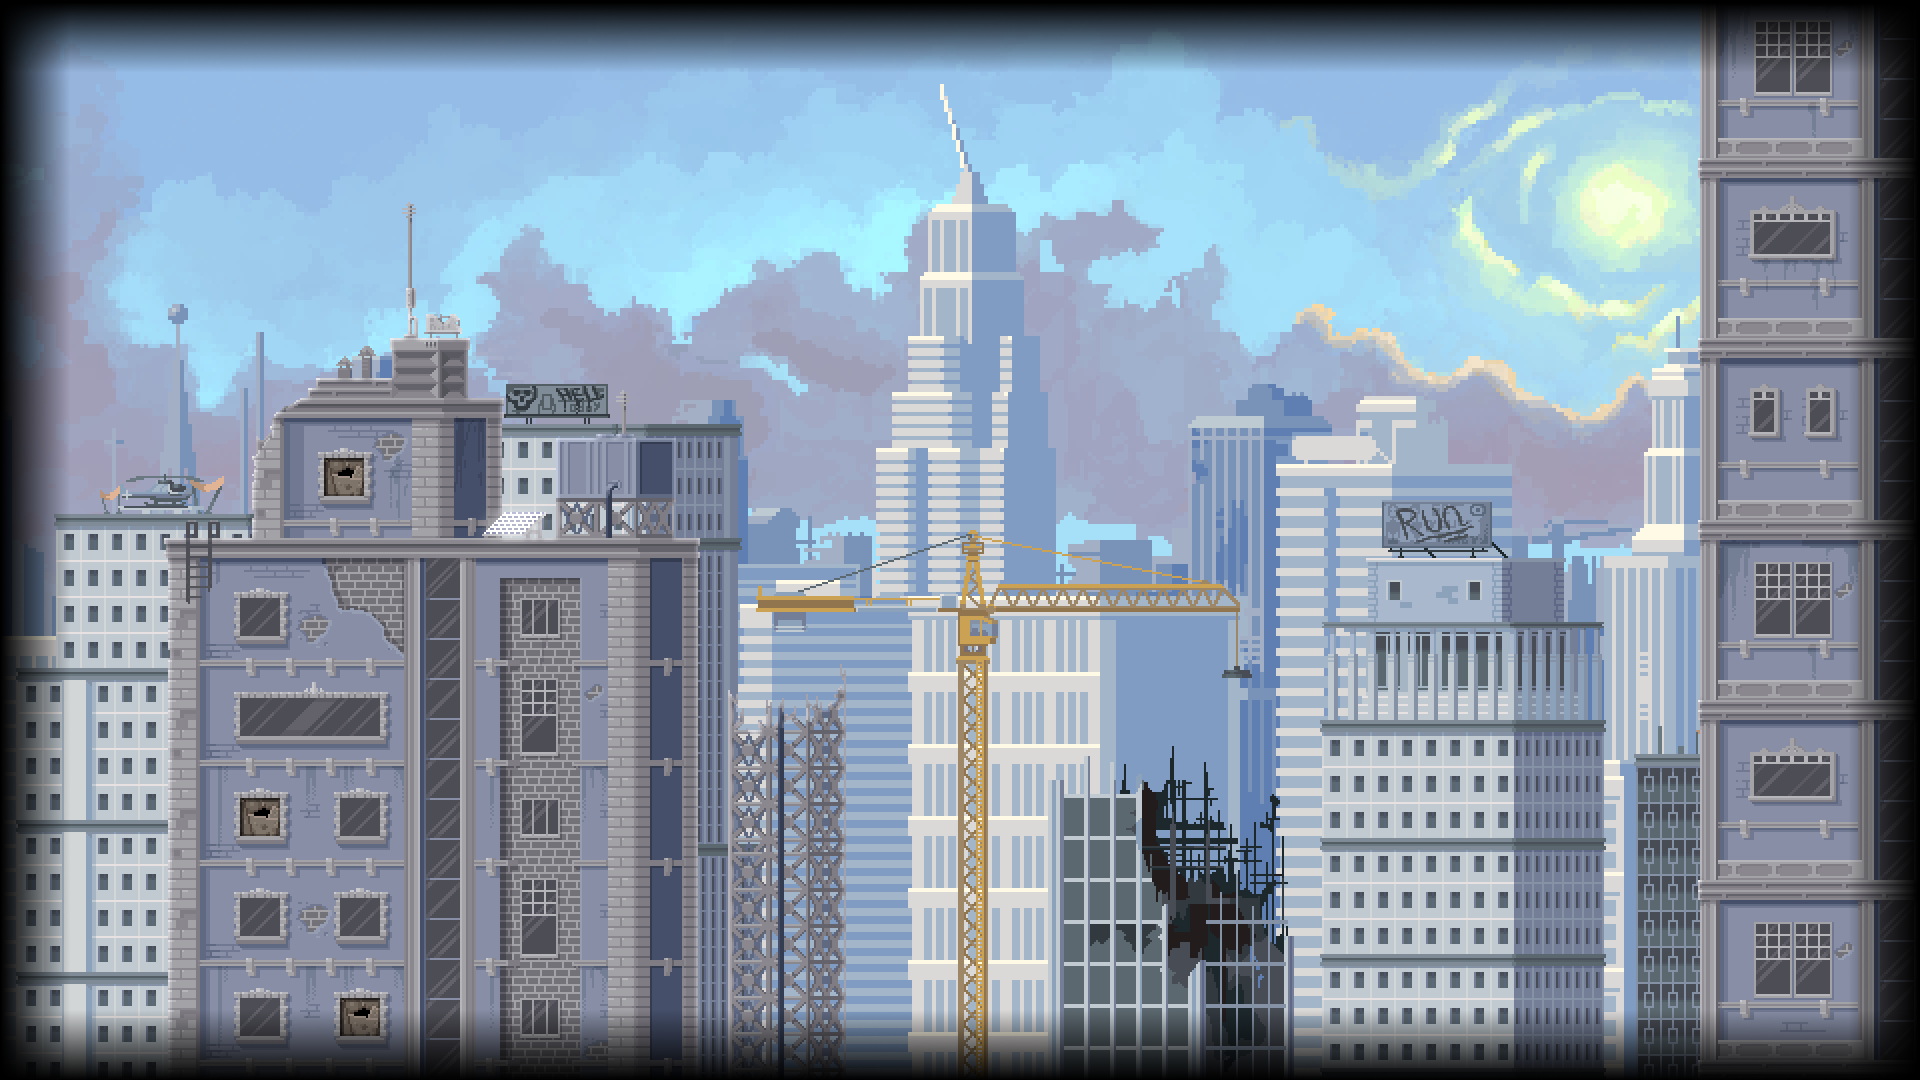 General 1920x1080 pixels pixel art pixelated building skyscraper cityscape cranes (machine) clouds digital art